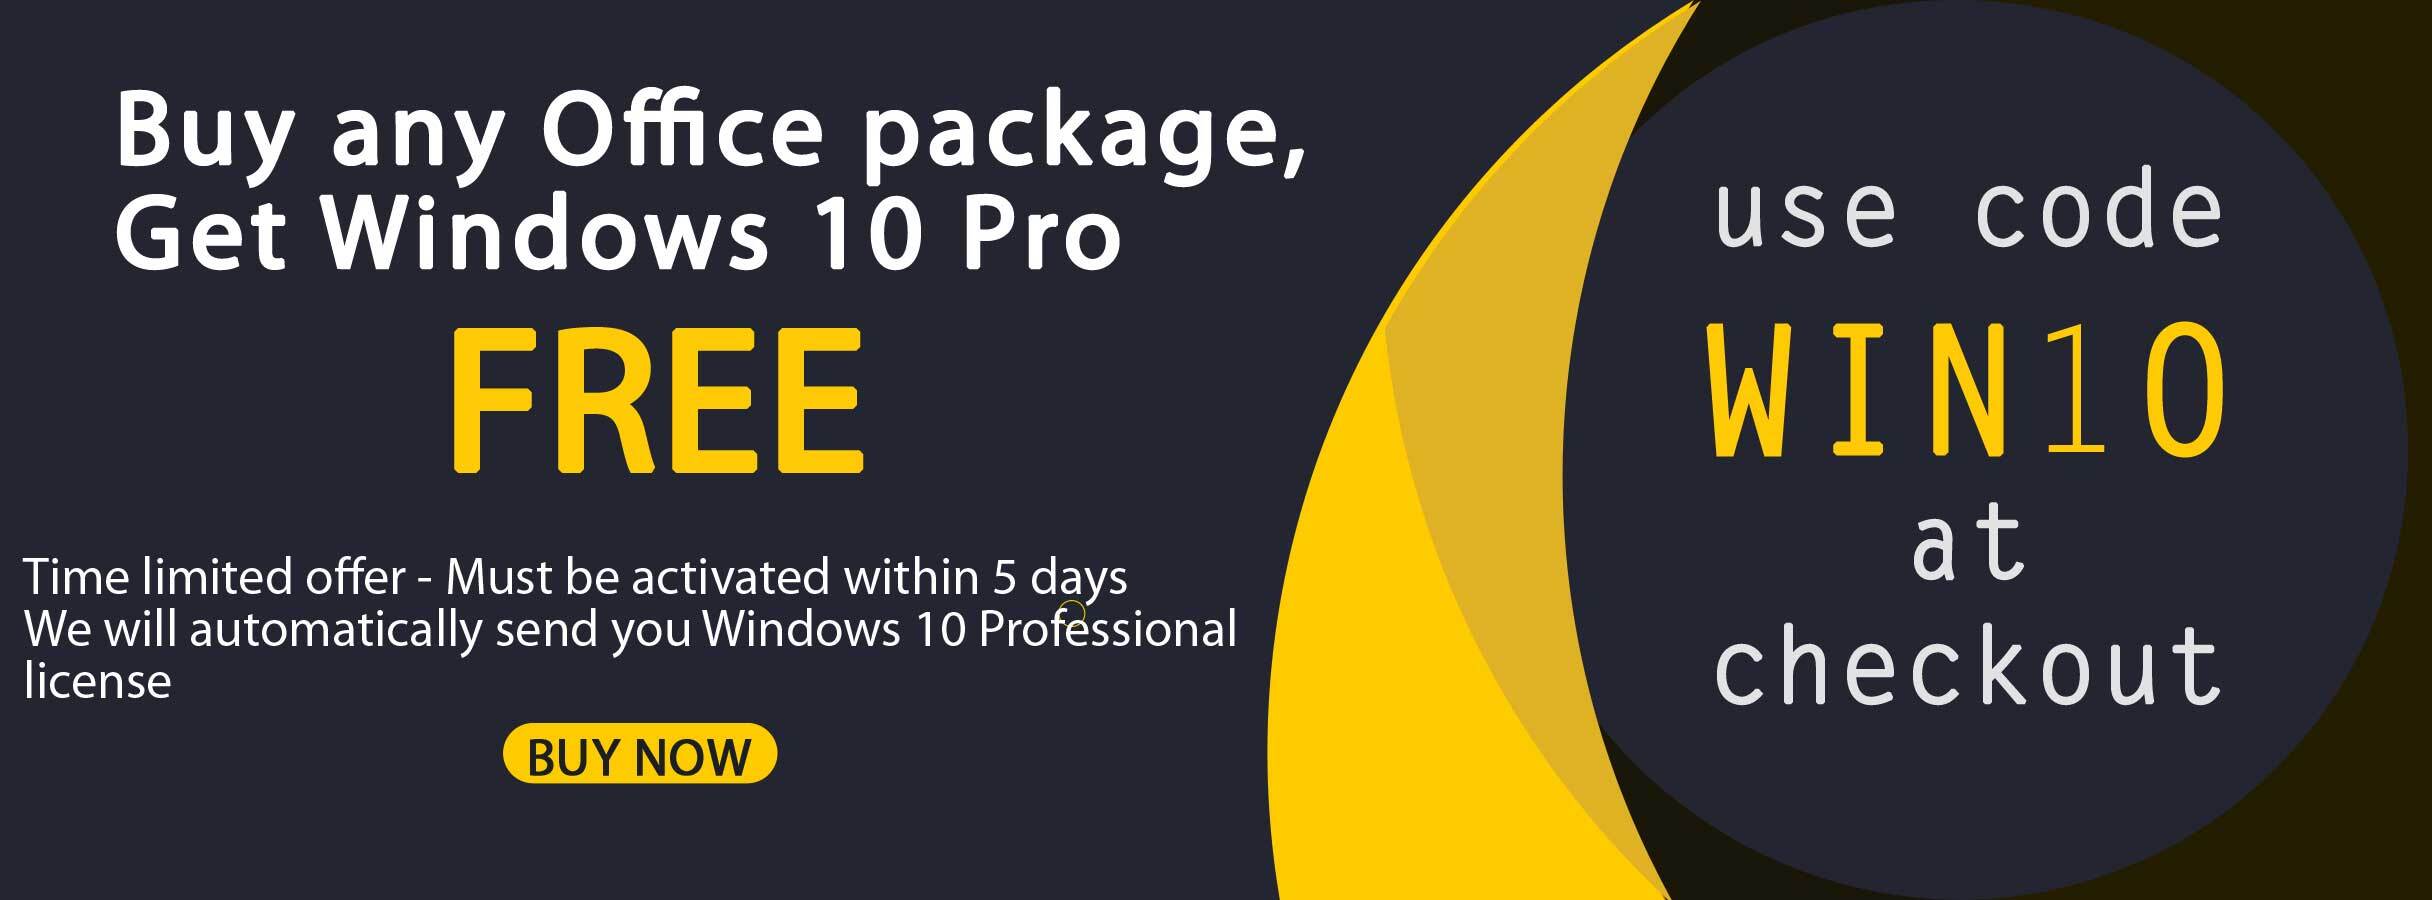 FREE Windows 10 Professional License